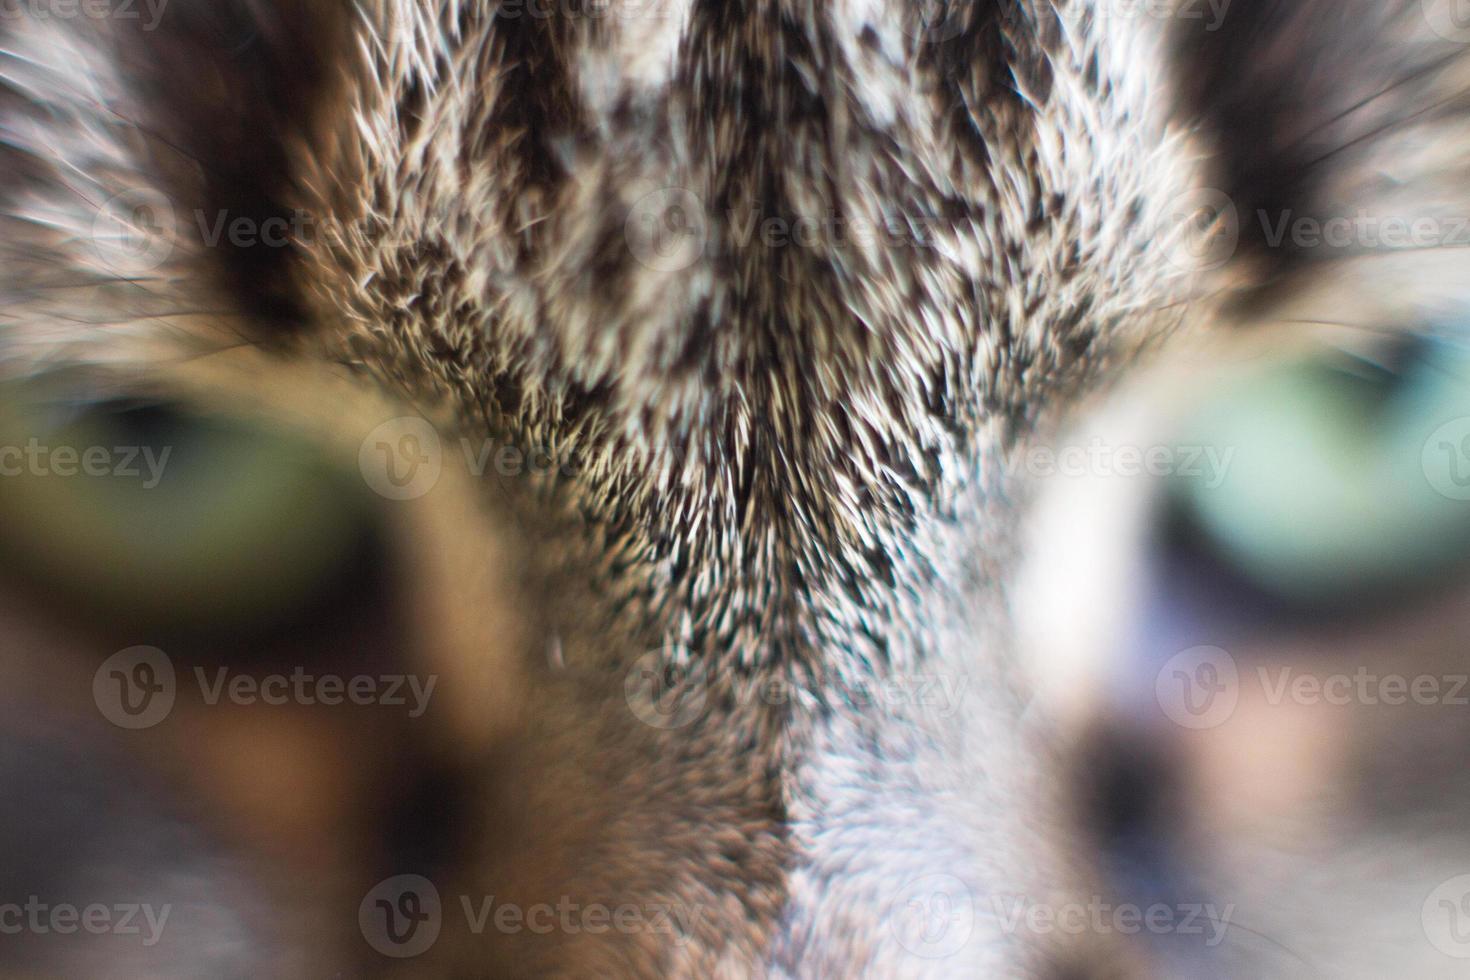 cat's eye close up. gray cat's head photo